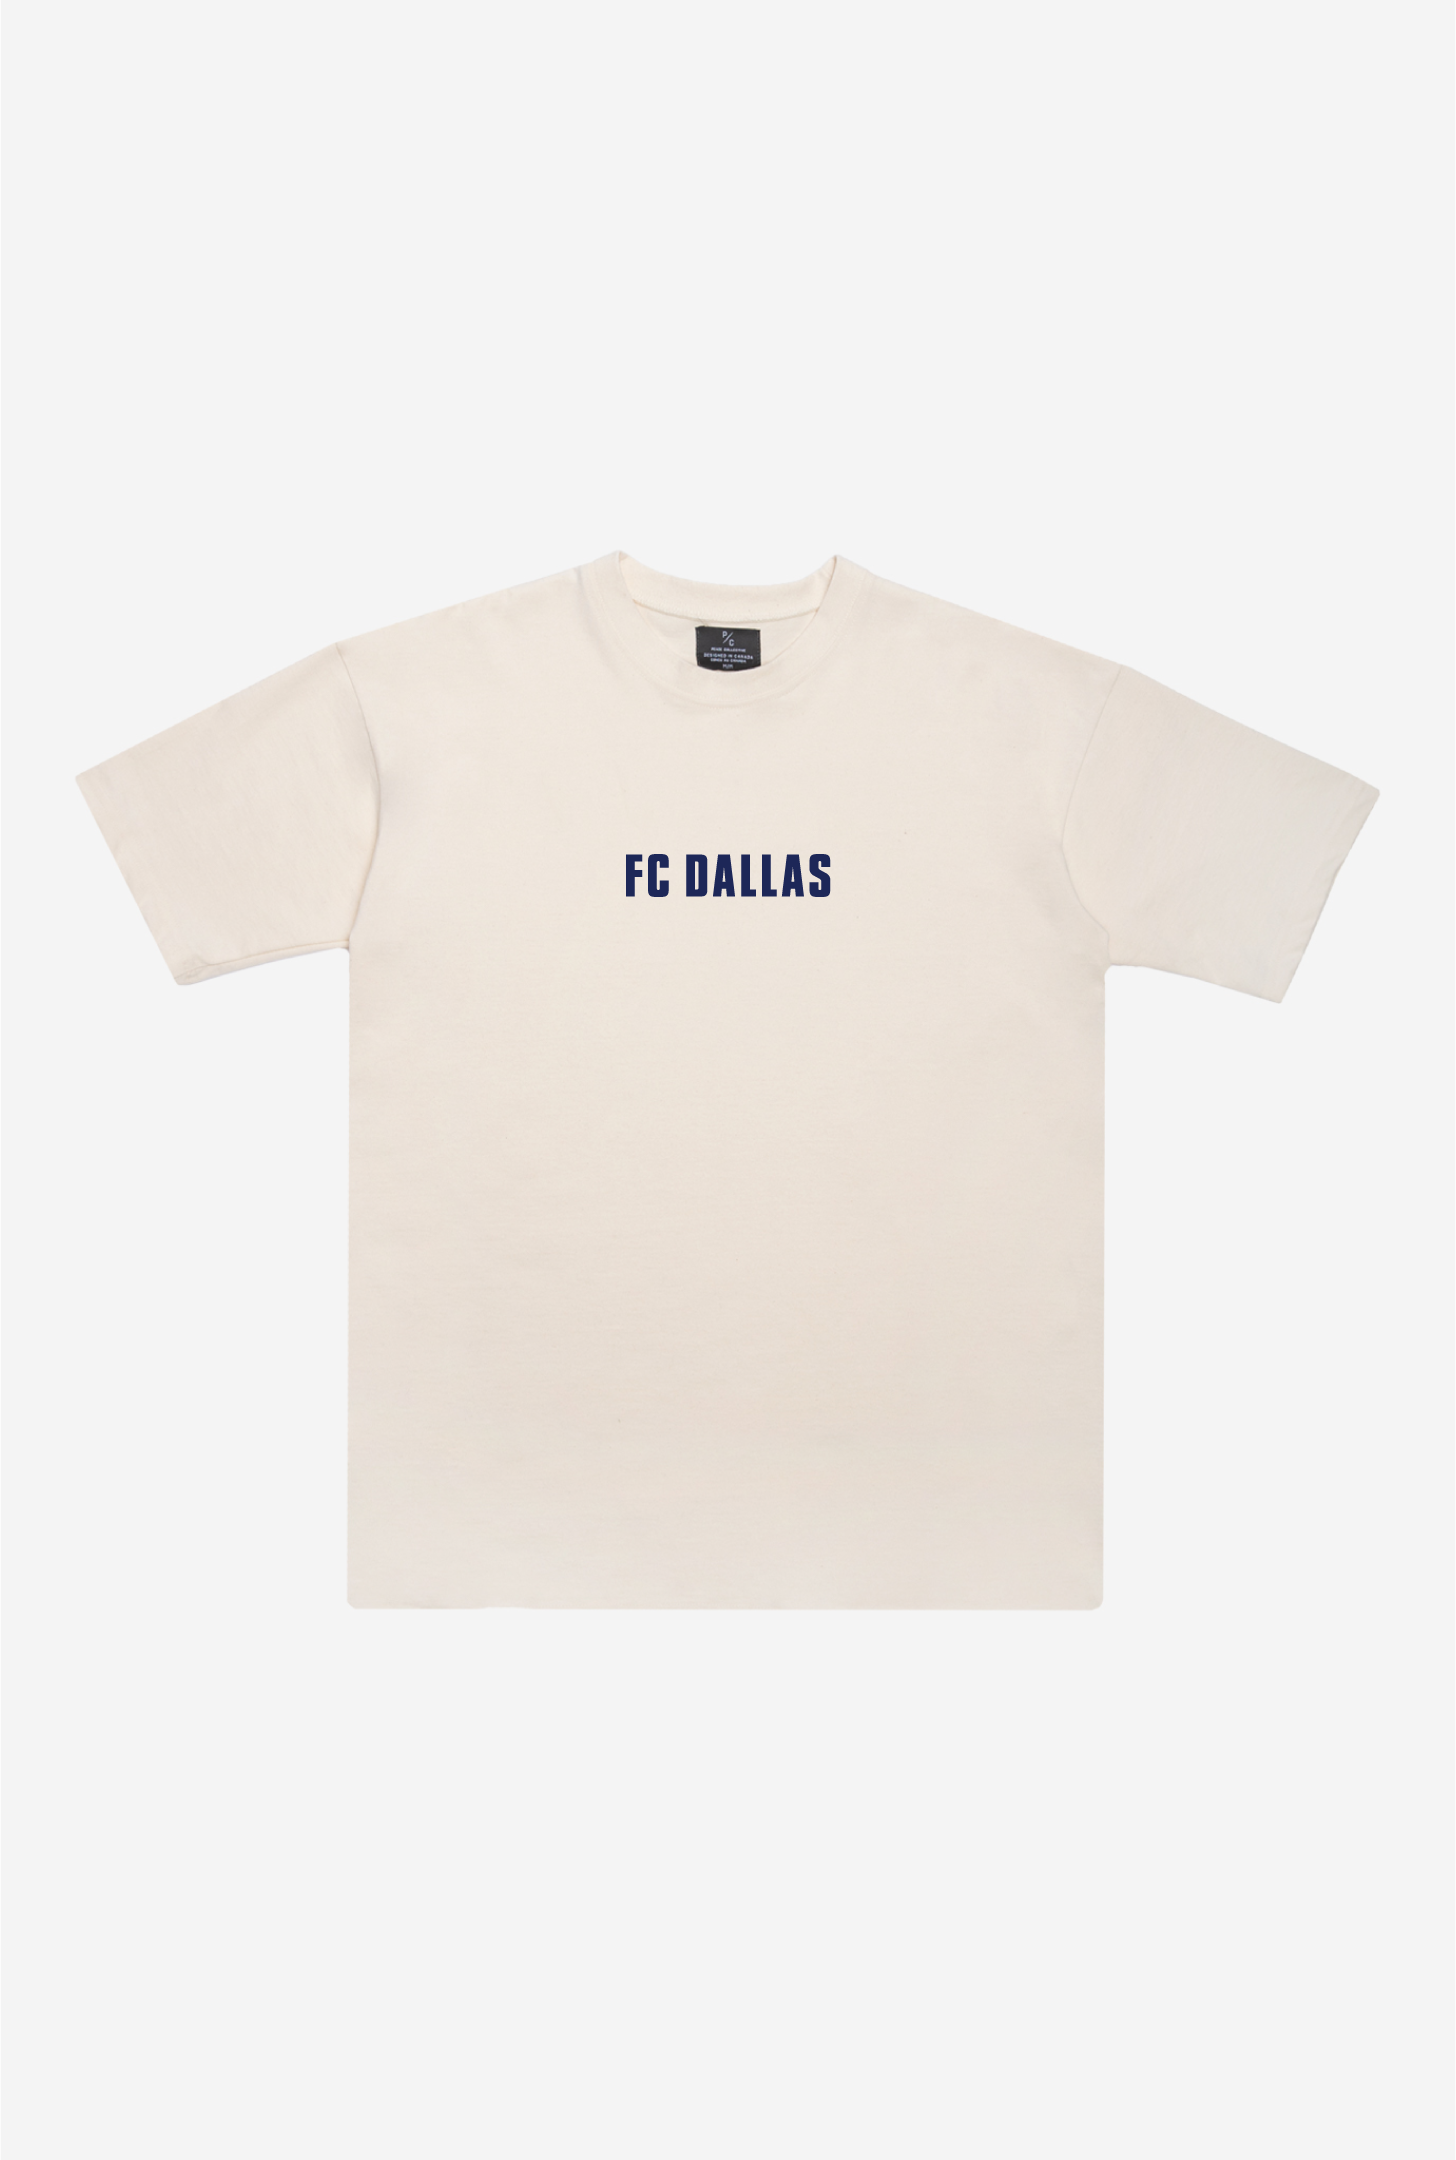 FC Dallas Heavyweight T-Shirt - Black